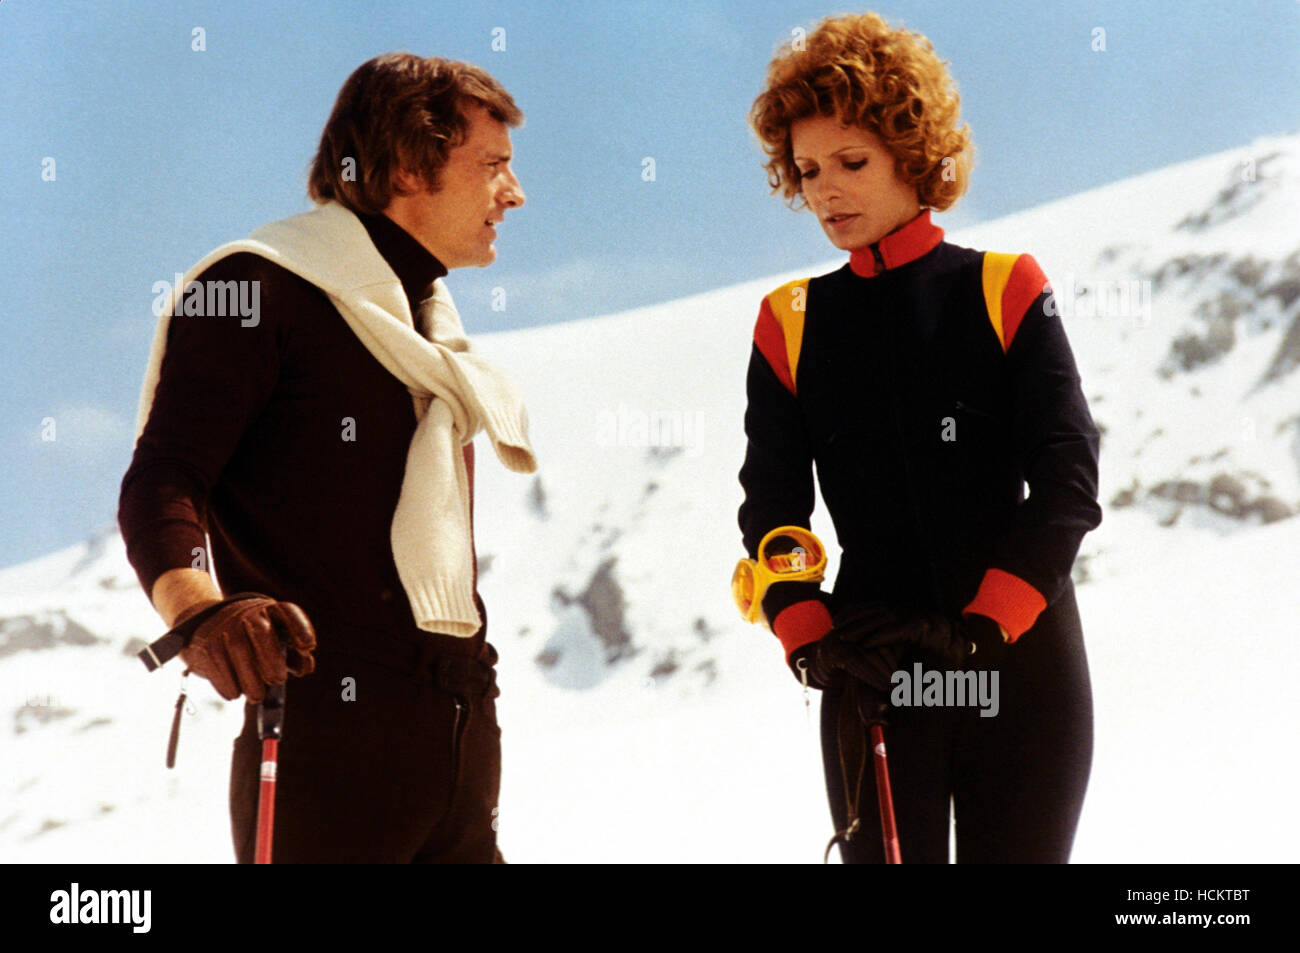 SNOW JOB, Jean-Claude Killy, Daniele Gaubert, 1972 Stock Photo - Alamy